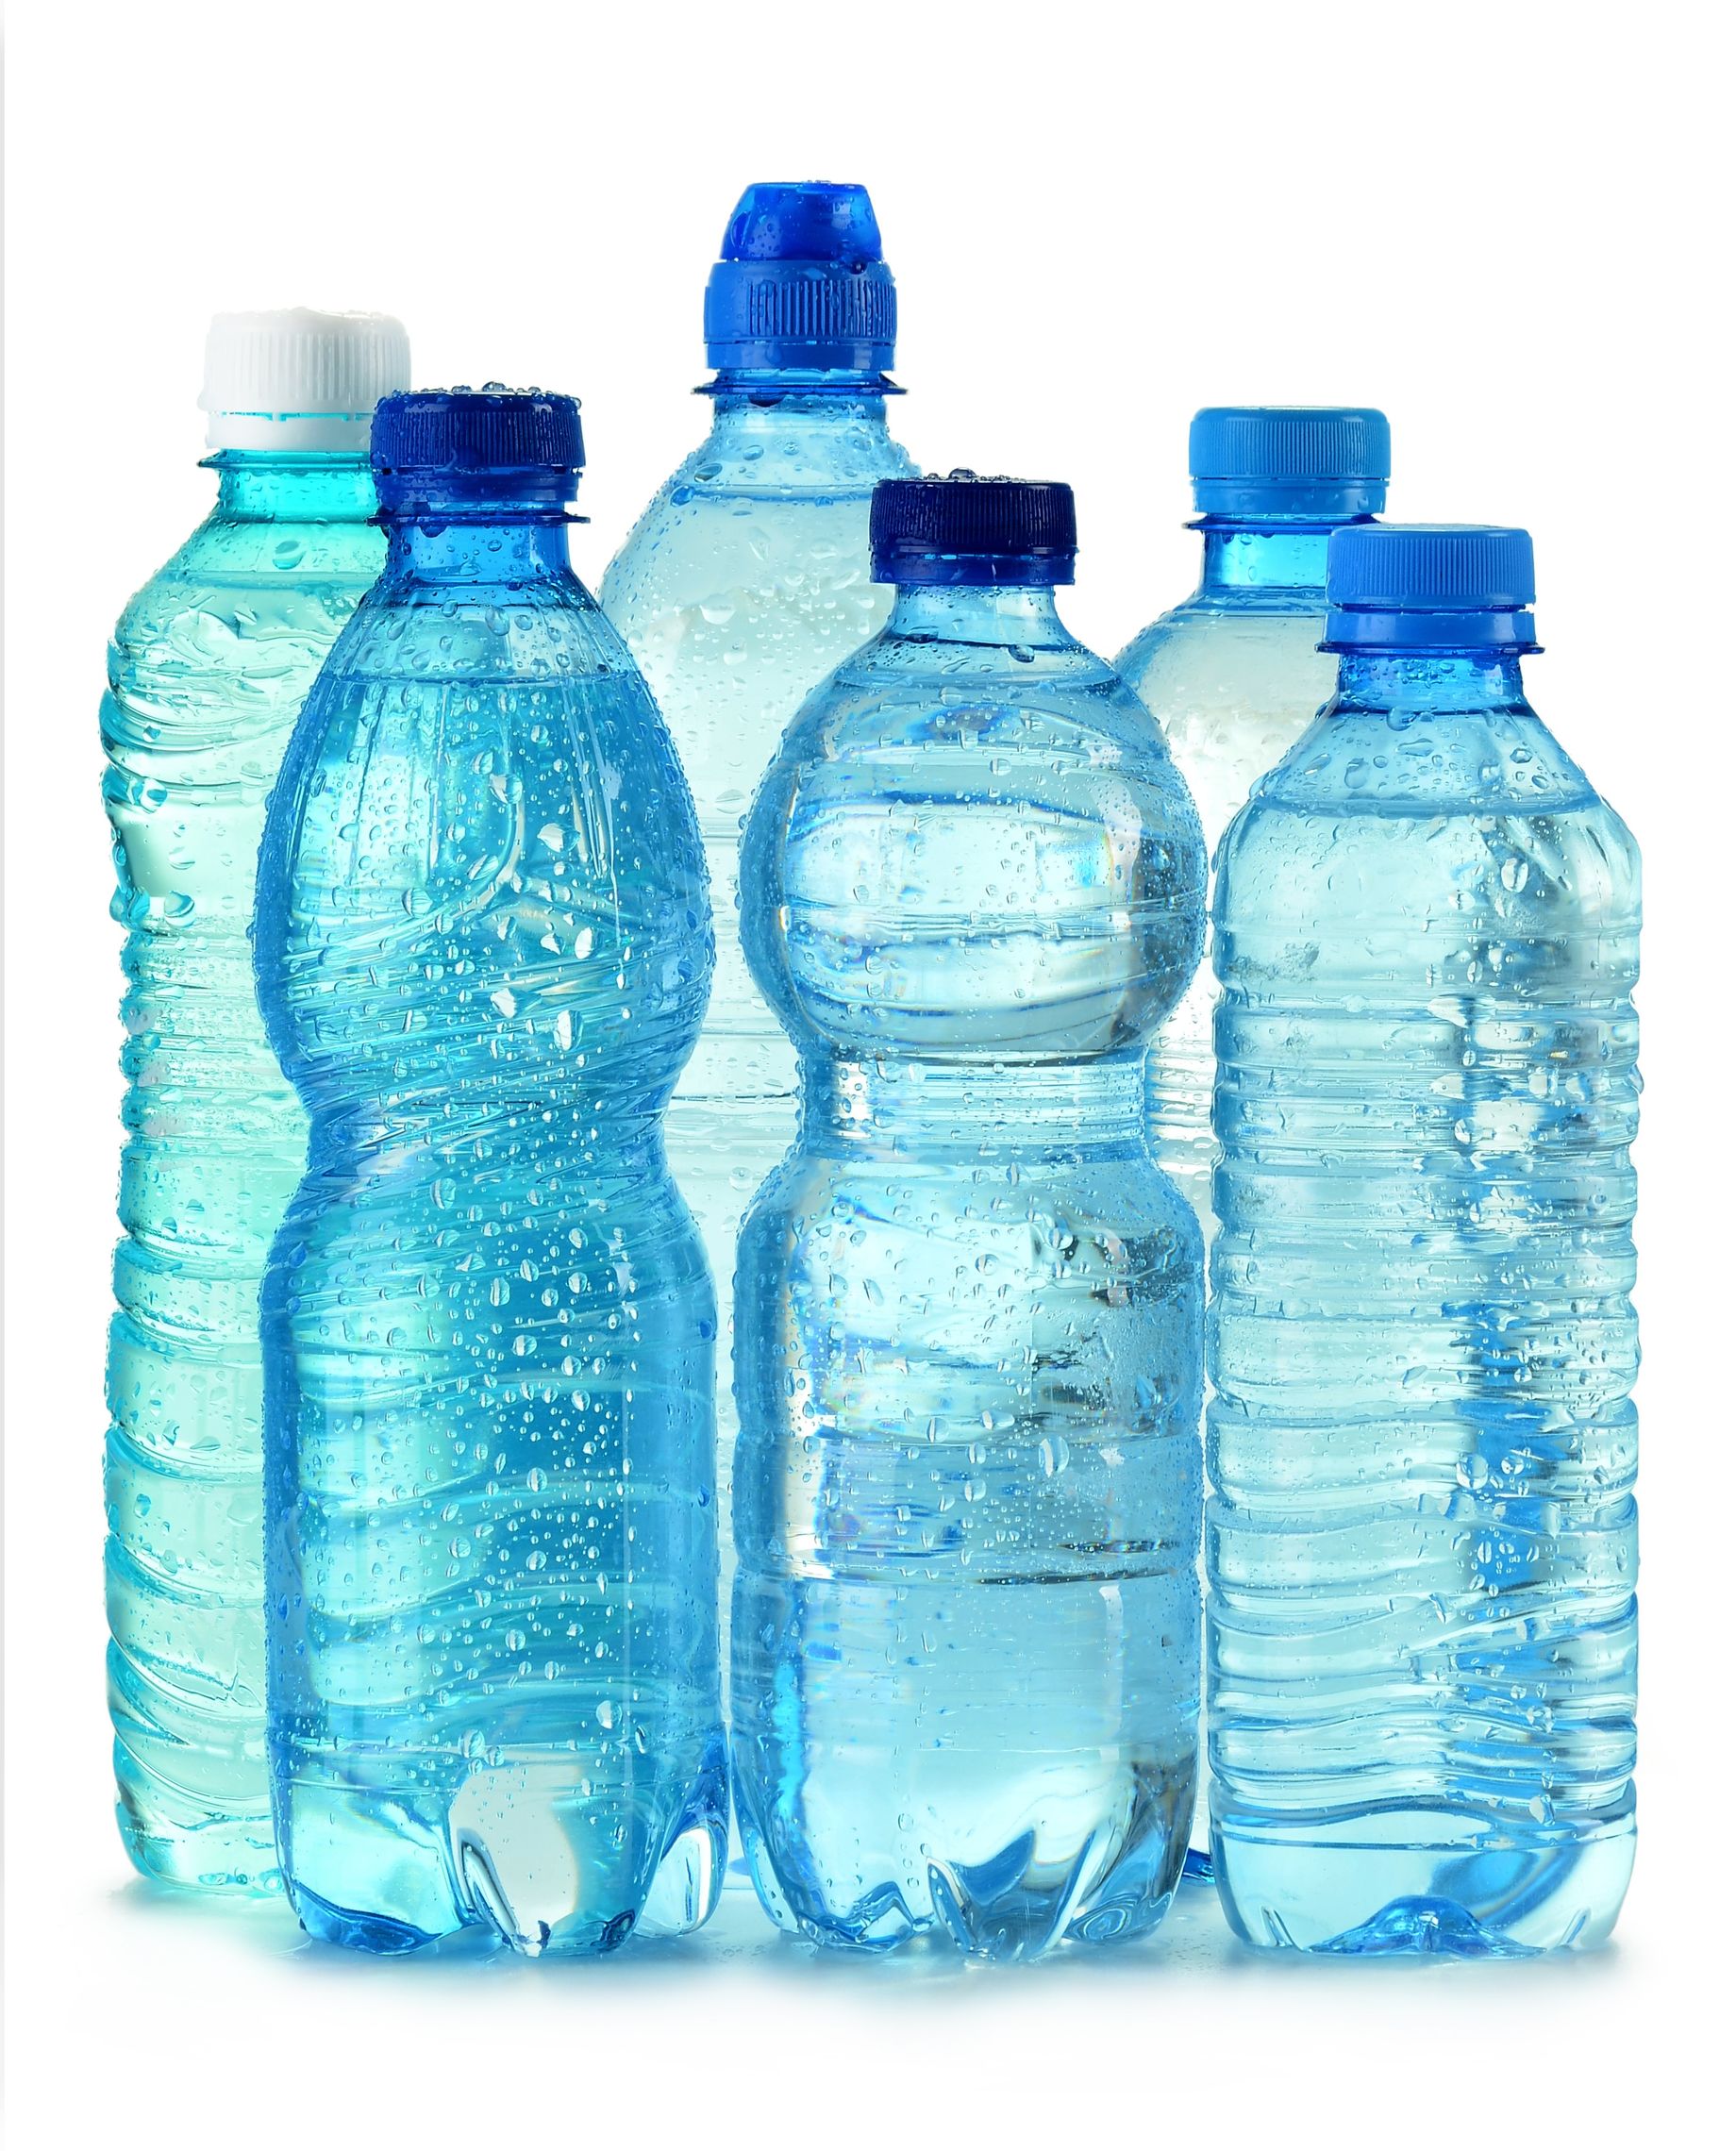 10069237 - garrafas plásticas de policarbonato de água mineral isoladas no fundo branco